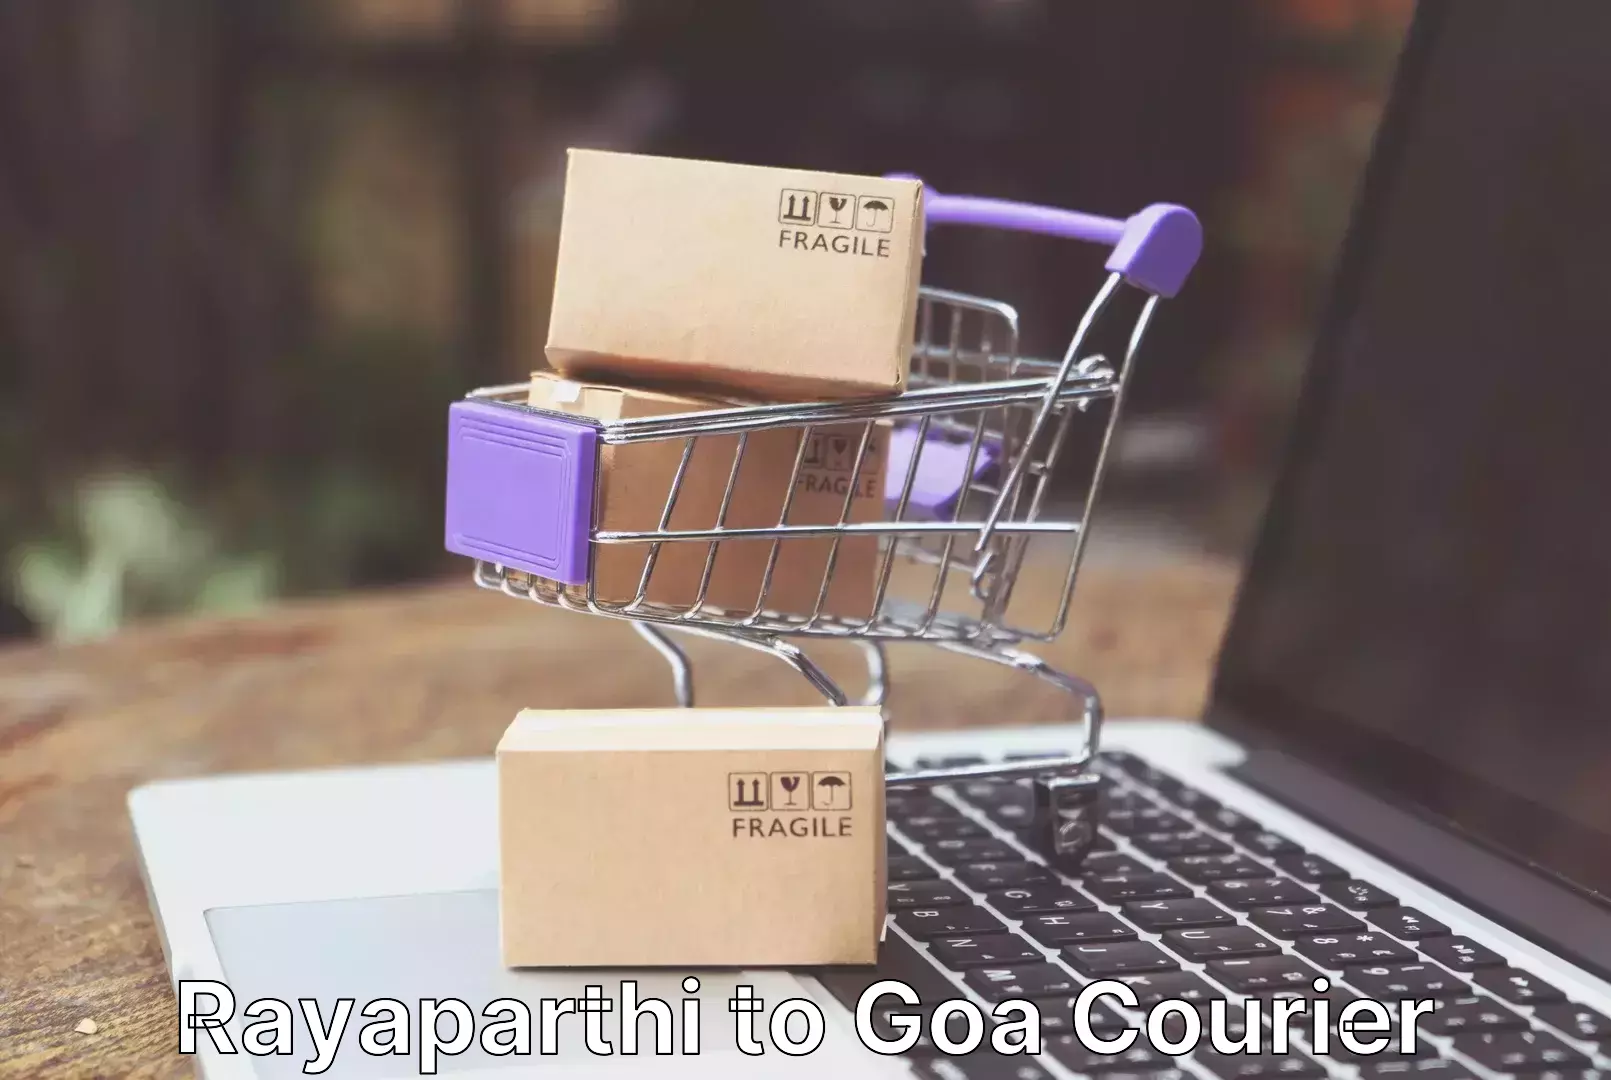 Moving and packing experts Rayaparthi to Goa